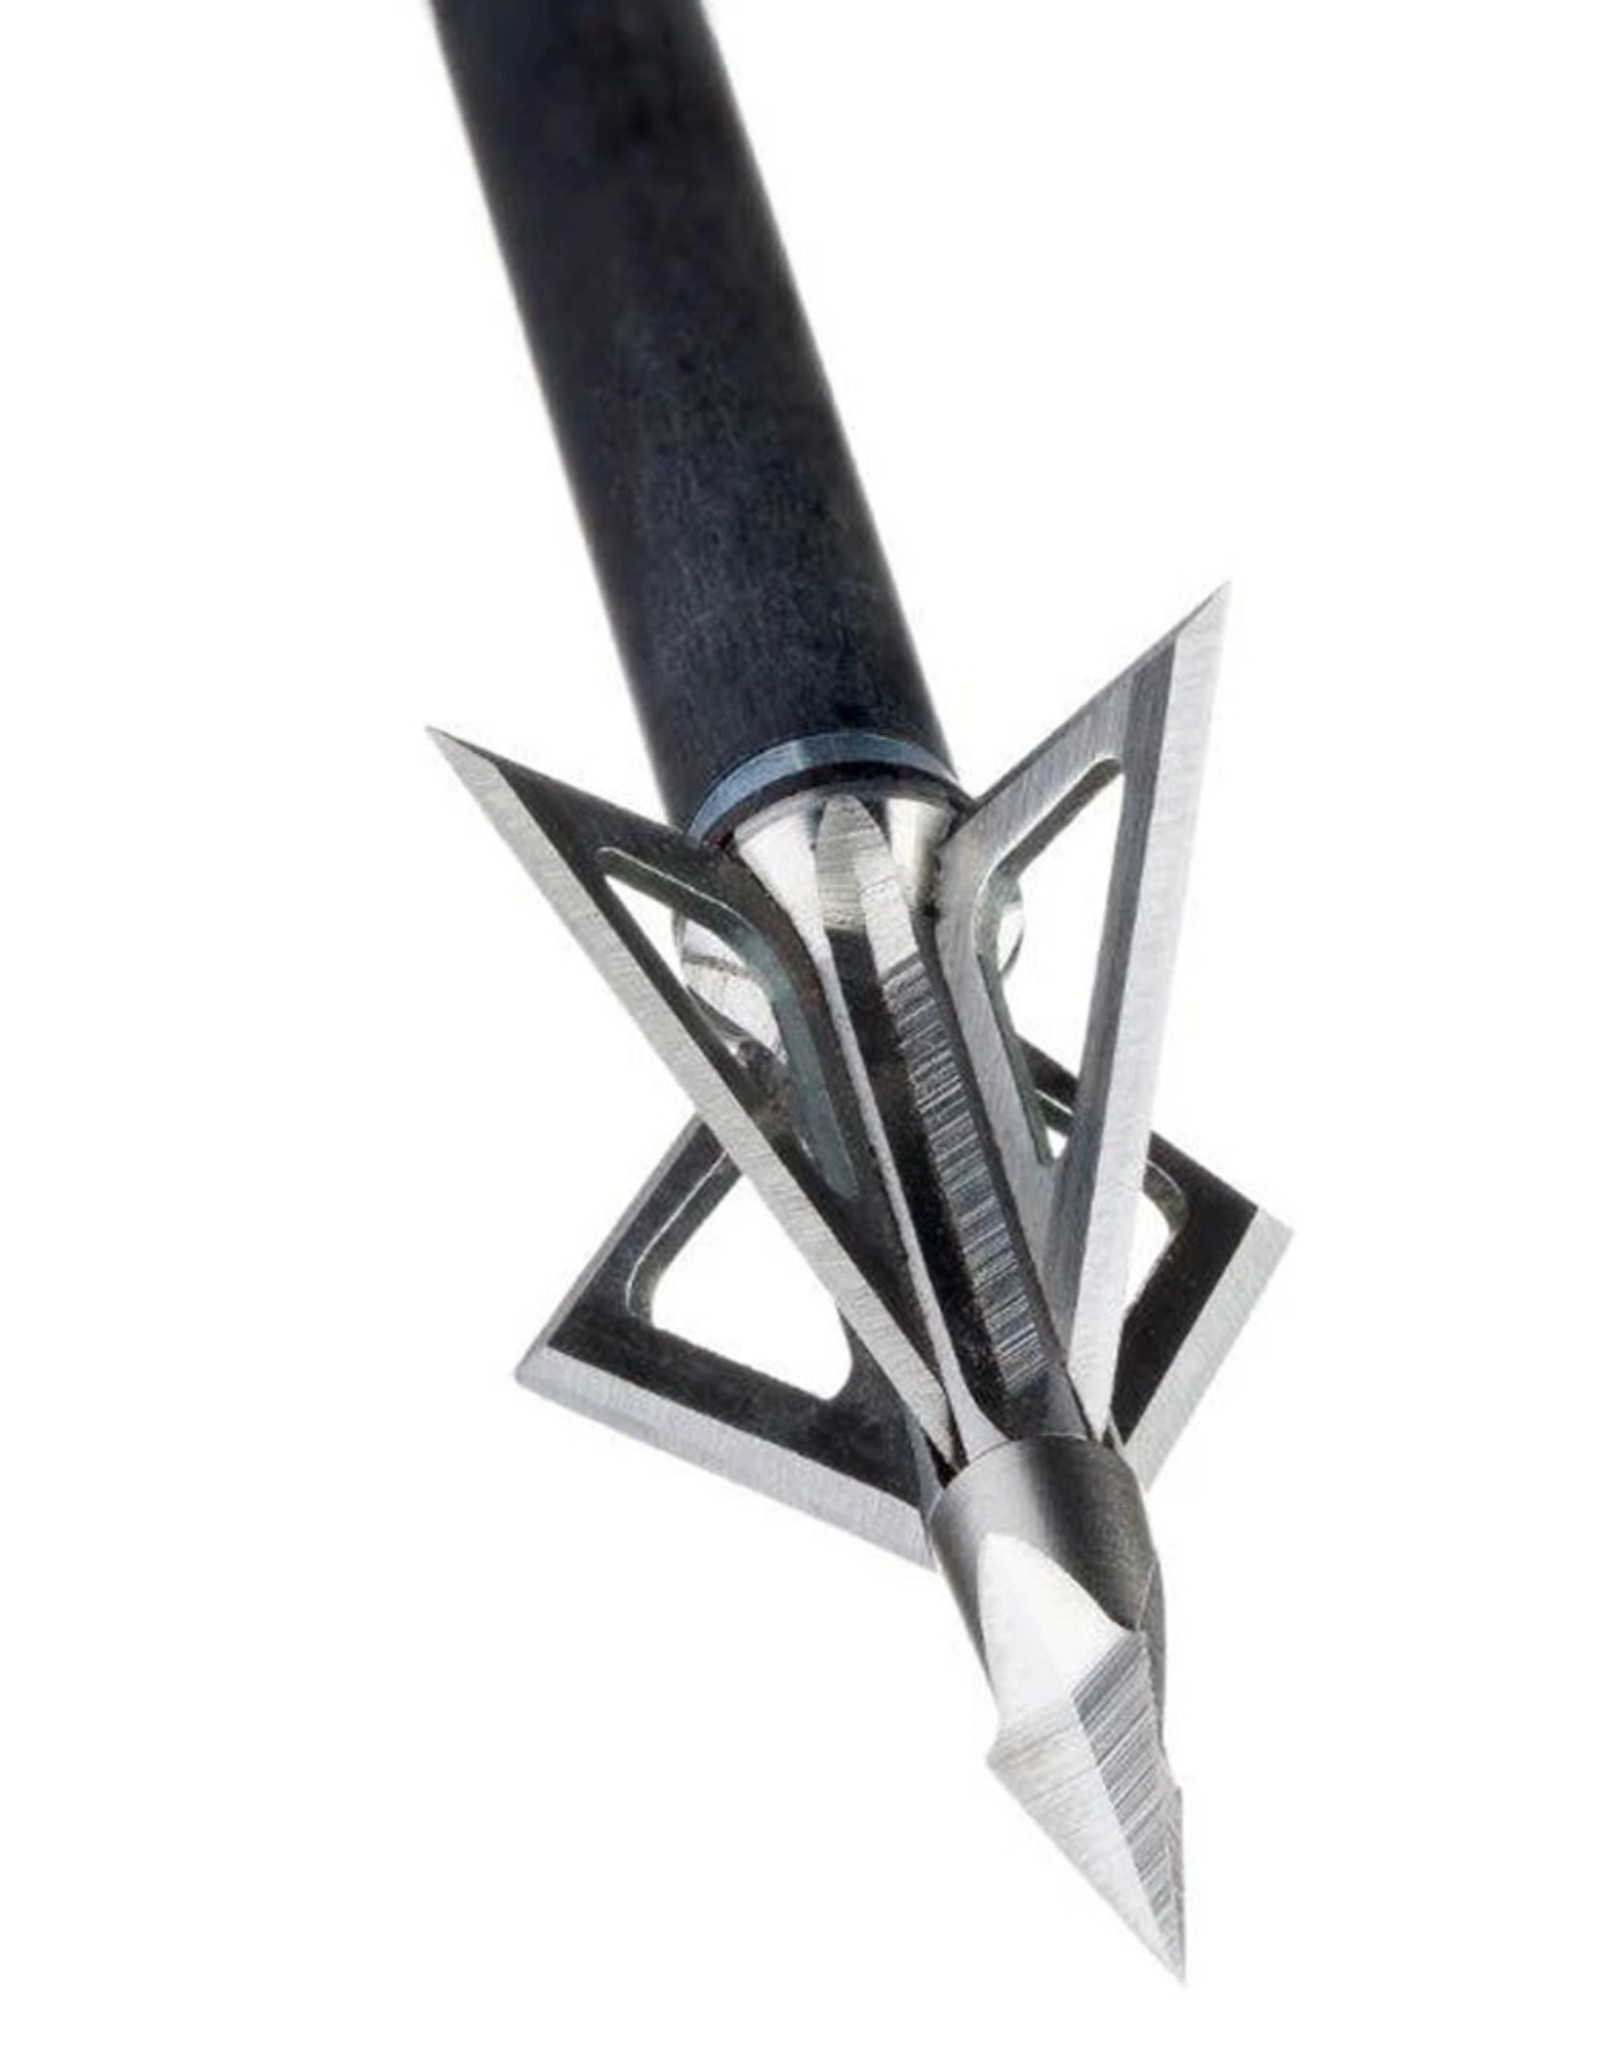 Grim Reaper Hades Pro 150 GR 4 Blade